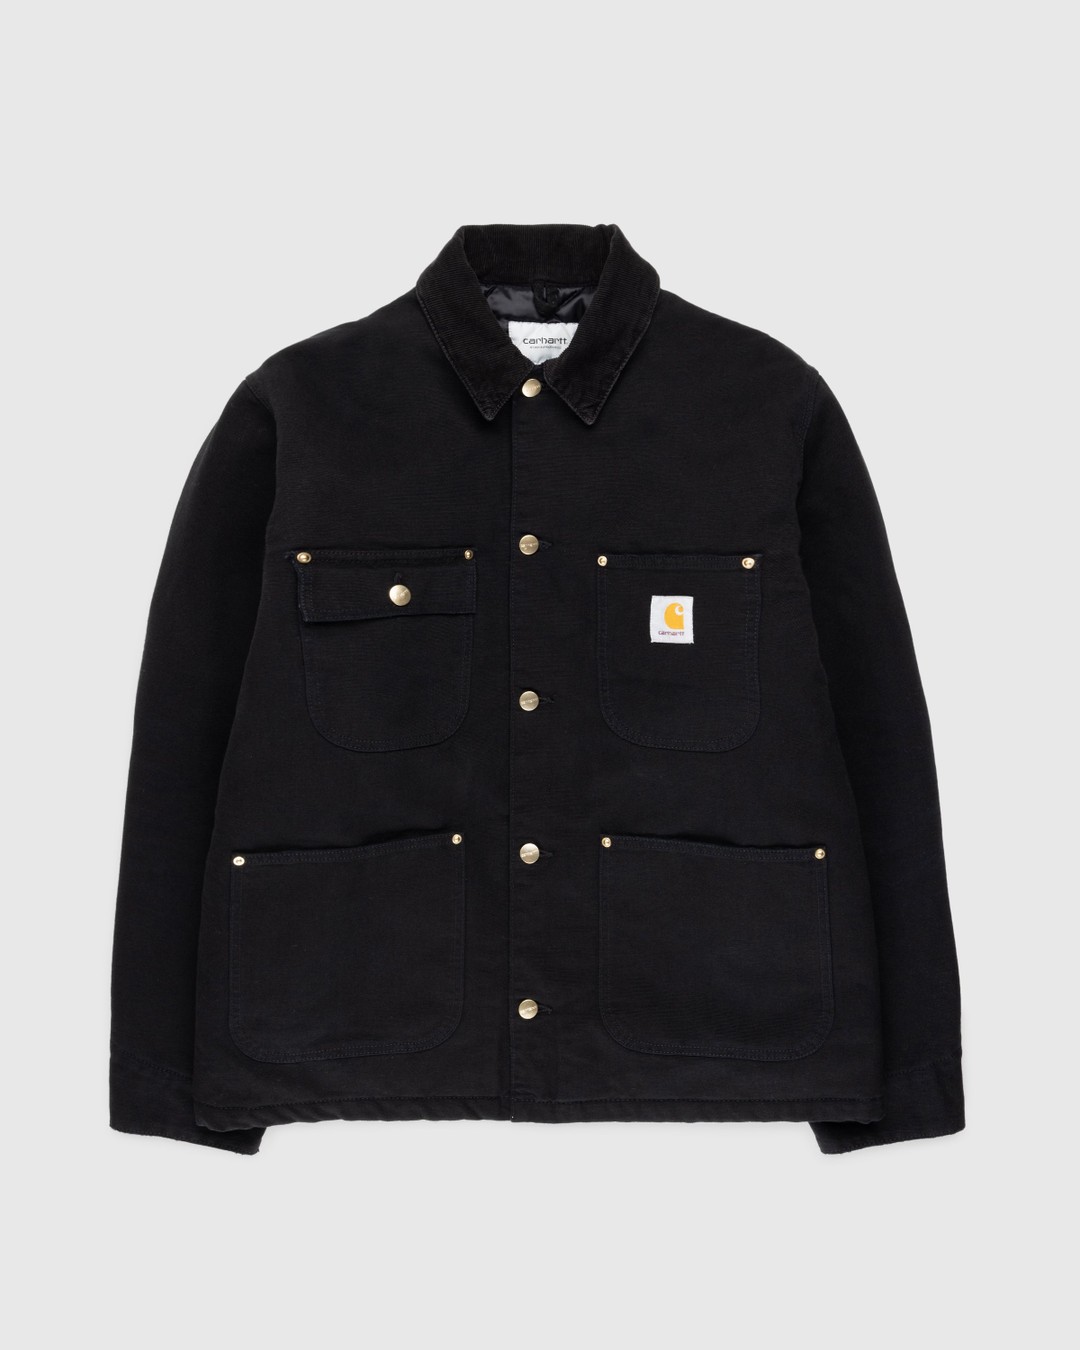 Carhartt WIP – OG Chore Coat Black/Aged Canvas - Outerwear - Black - Image 1